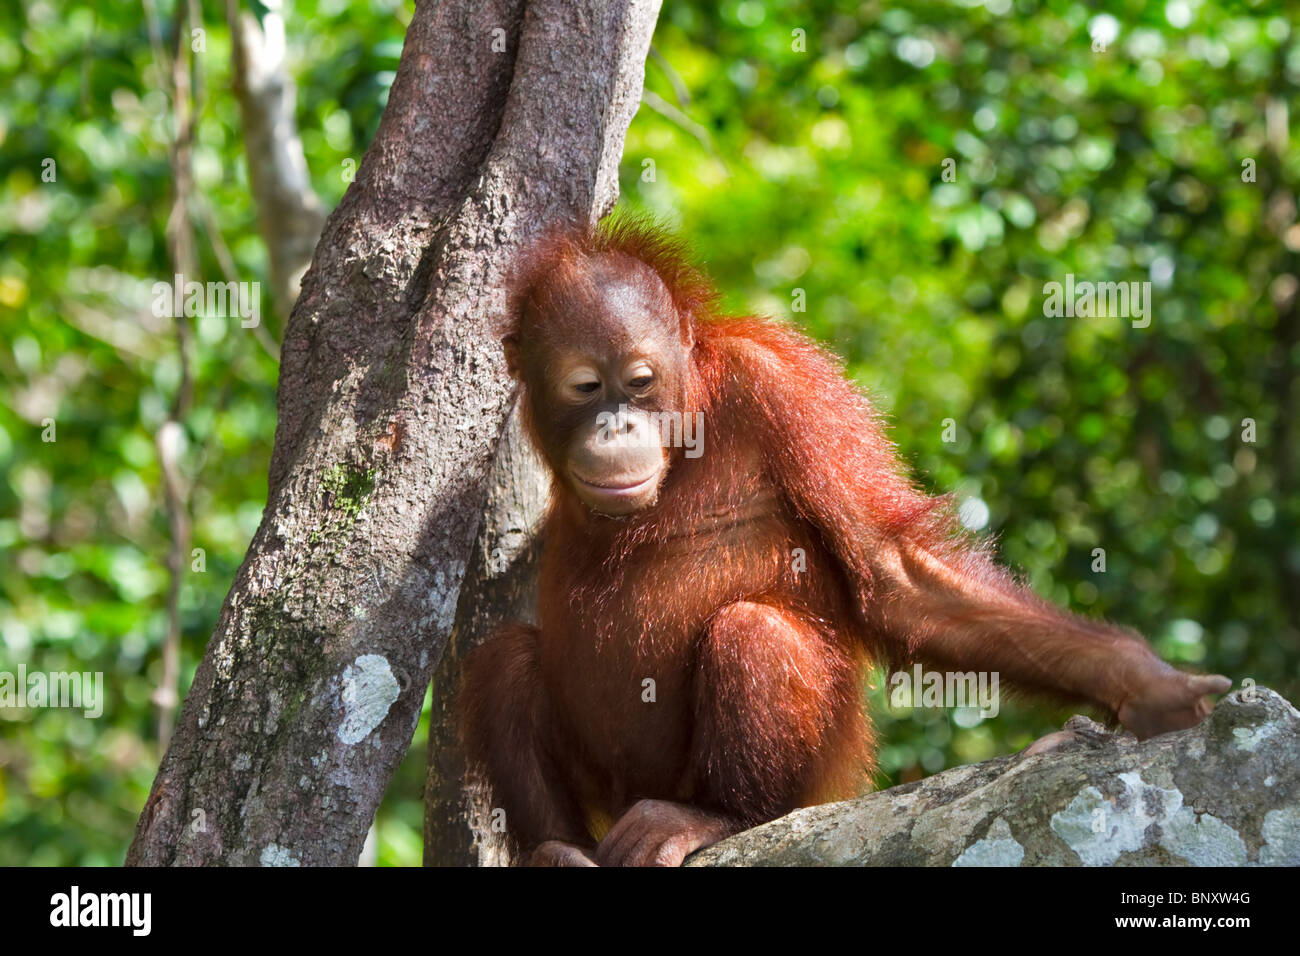 Orangután huérfano trepar a un árbol en la Reserva Natural de Ria Rasa, Kota Kinabalu, Sabah, Borneo malasio Foto de stock